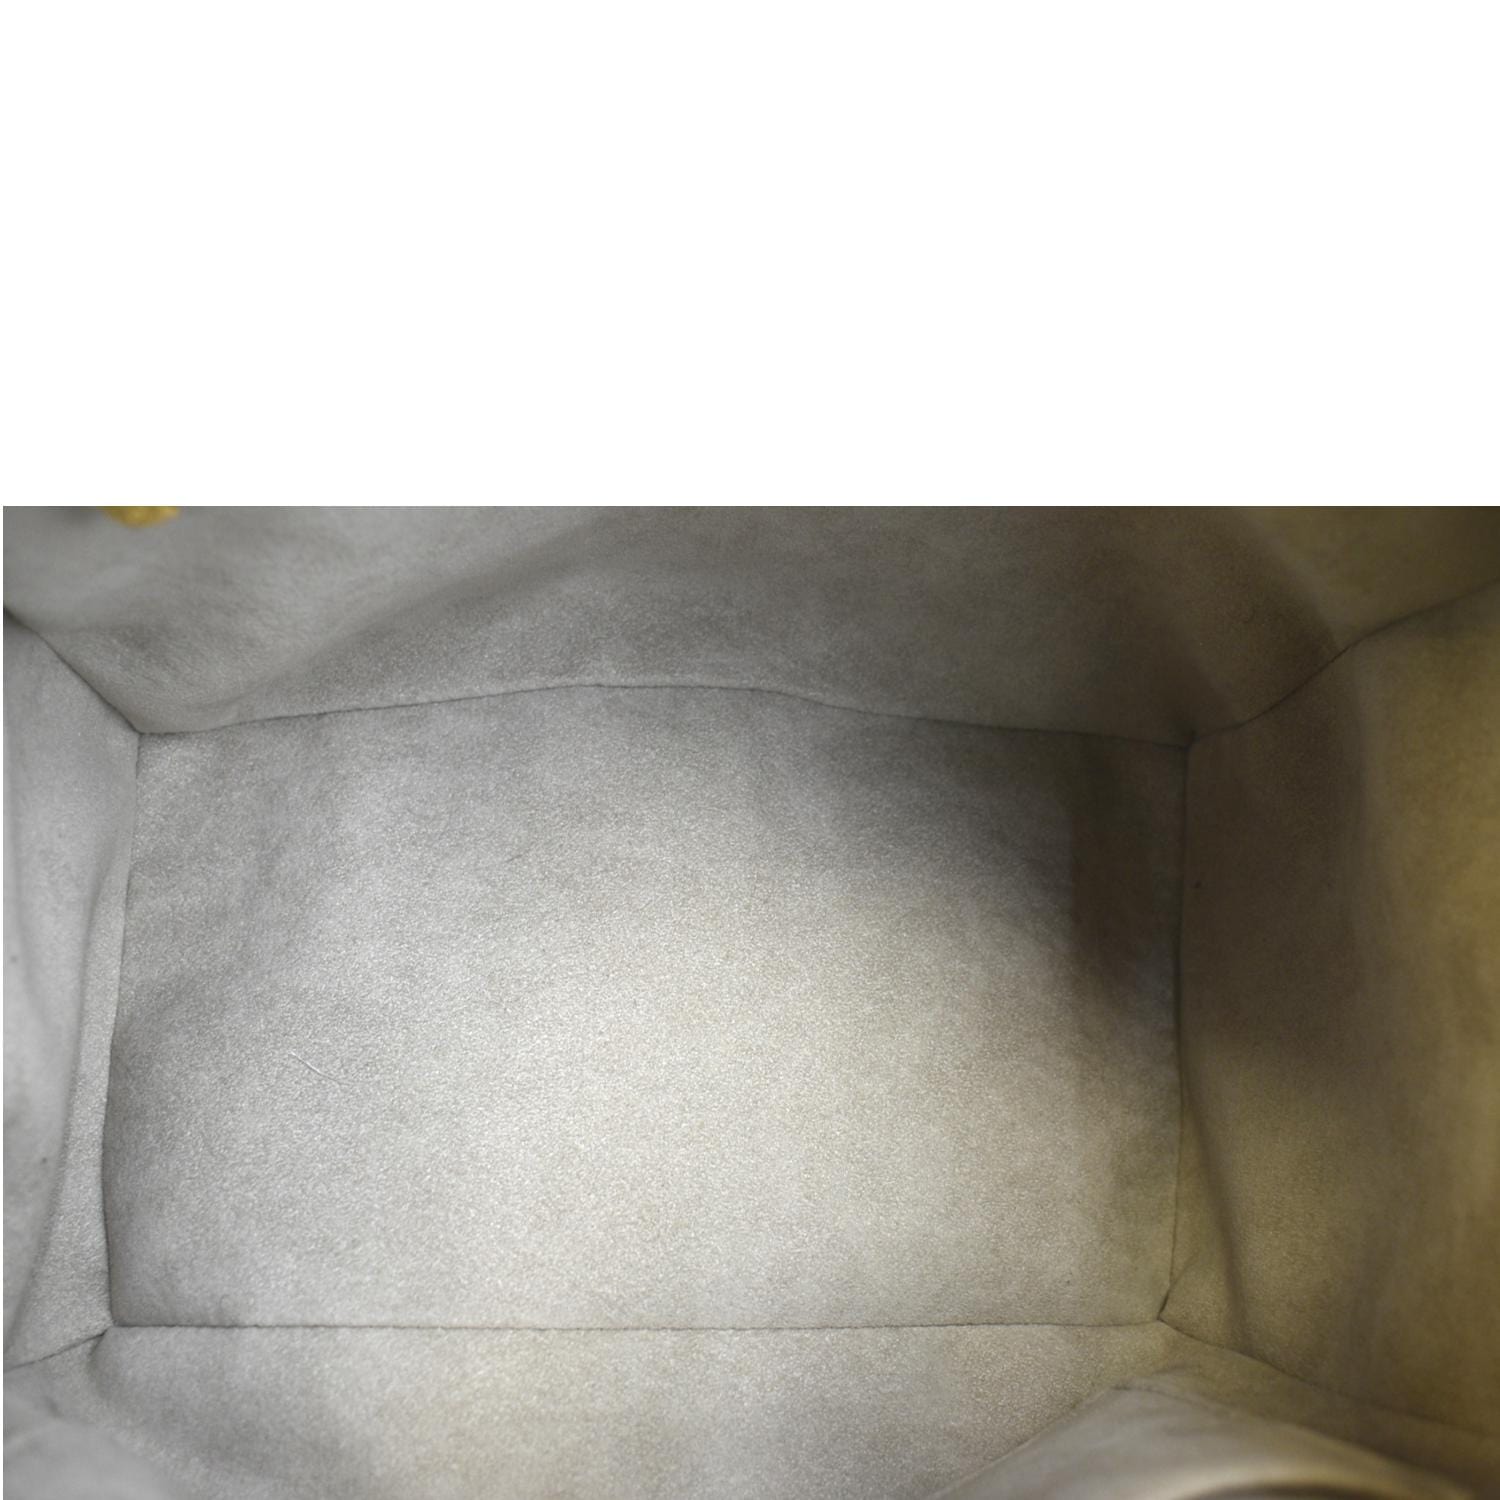 Louis Vuitton Speedy 25 Bandouliere Monogram Empreinte Shoulder Bag Tourterelle